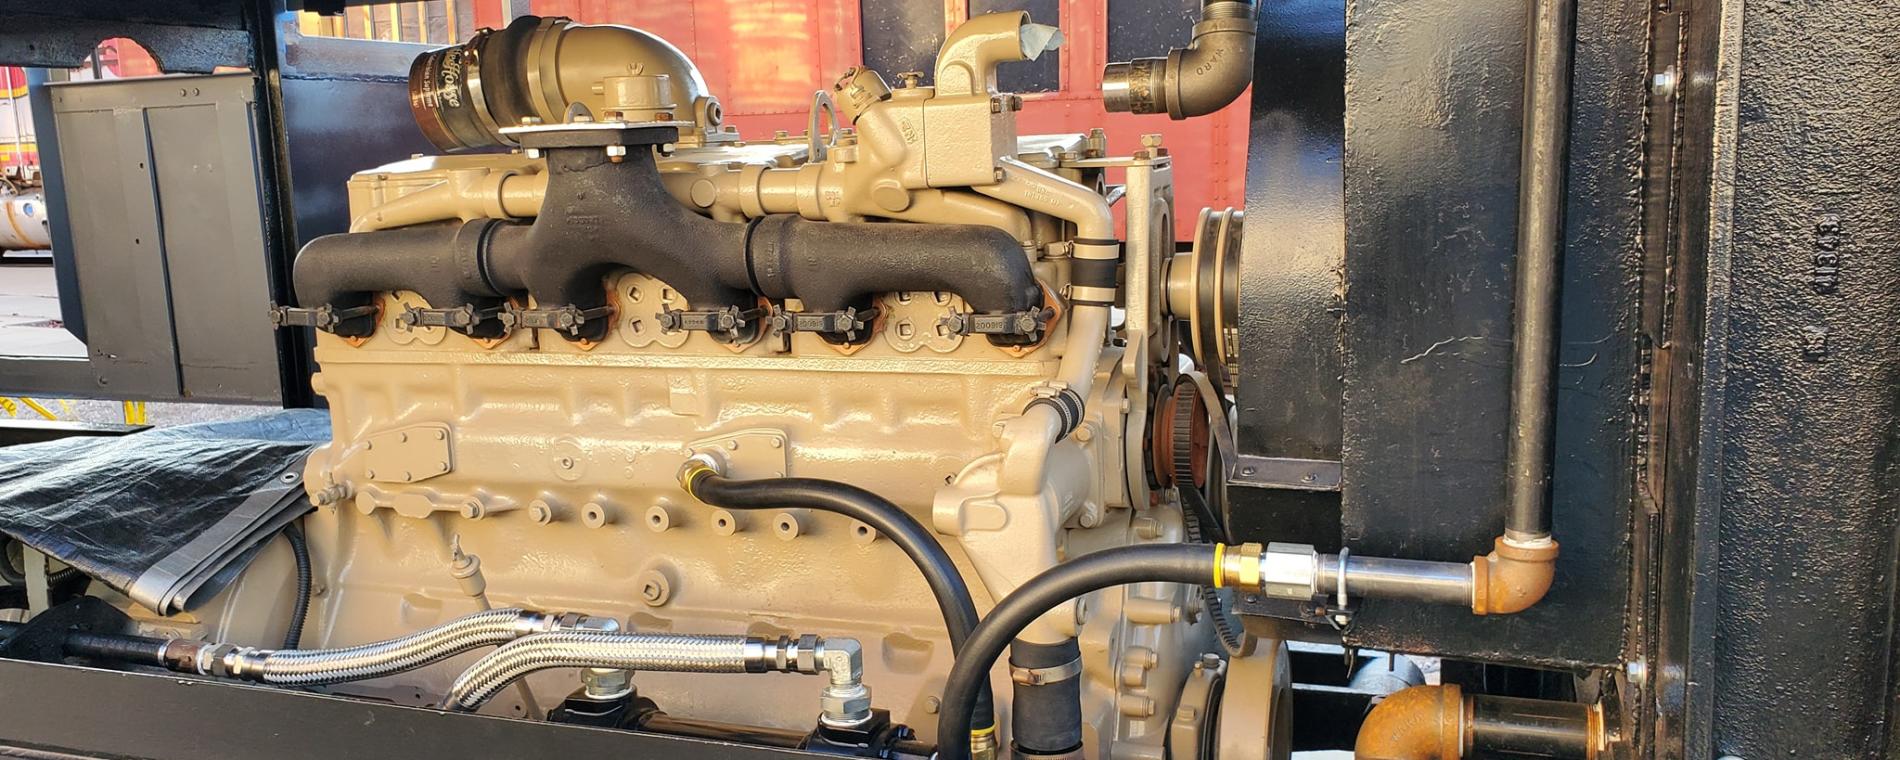 Great Plains Transportation Museum Engine